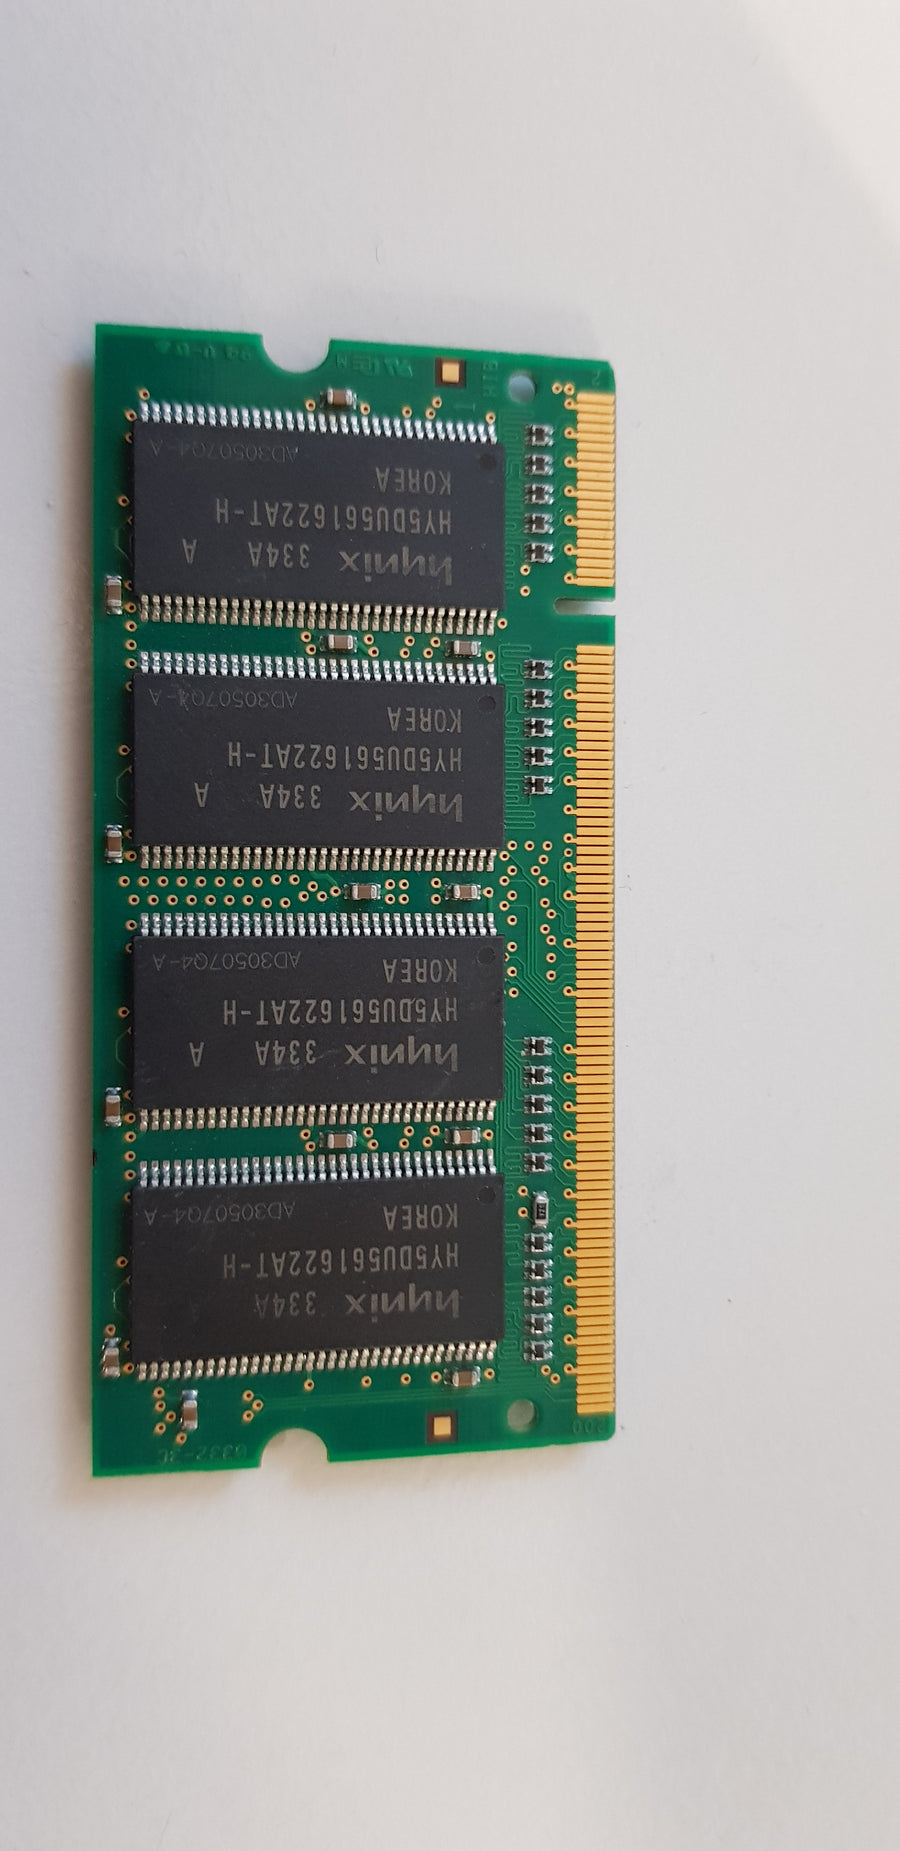 Hynix 256MB DDR 266MHz CL2.5 PC2100  200p SODIMM ( HYMD232M646A6-H)